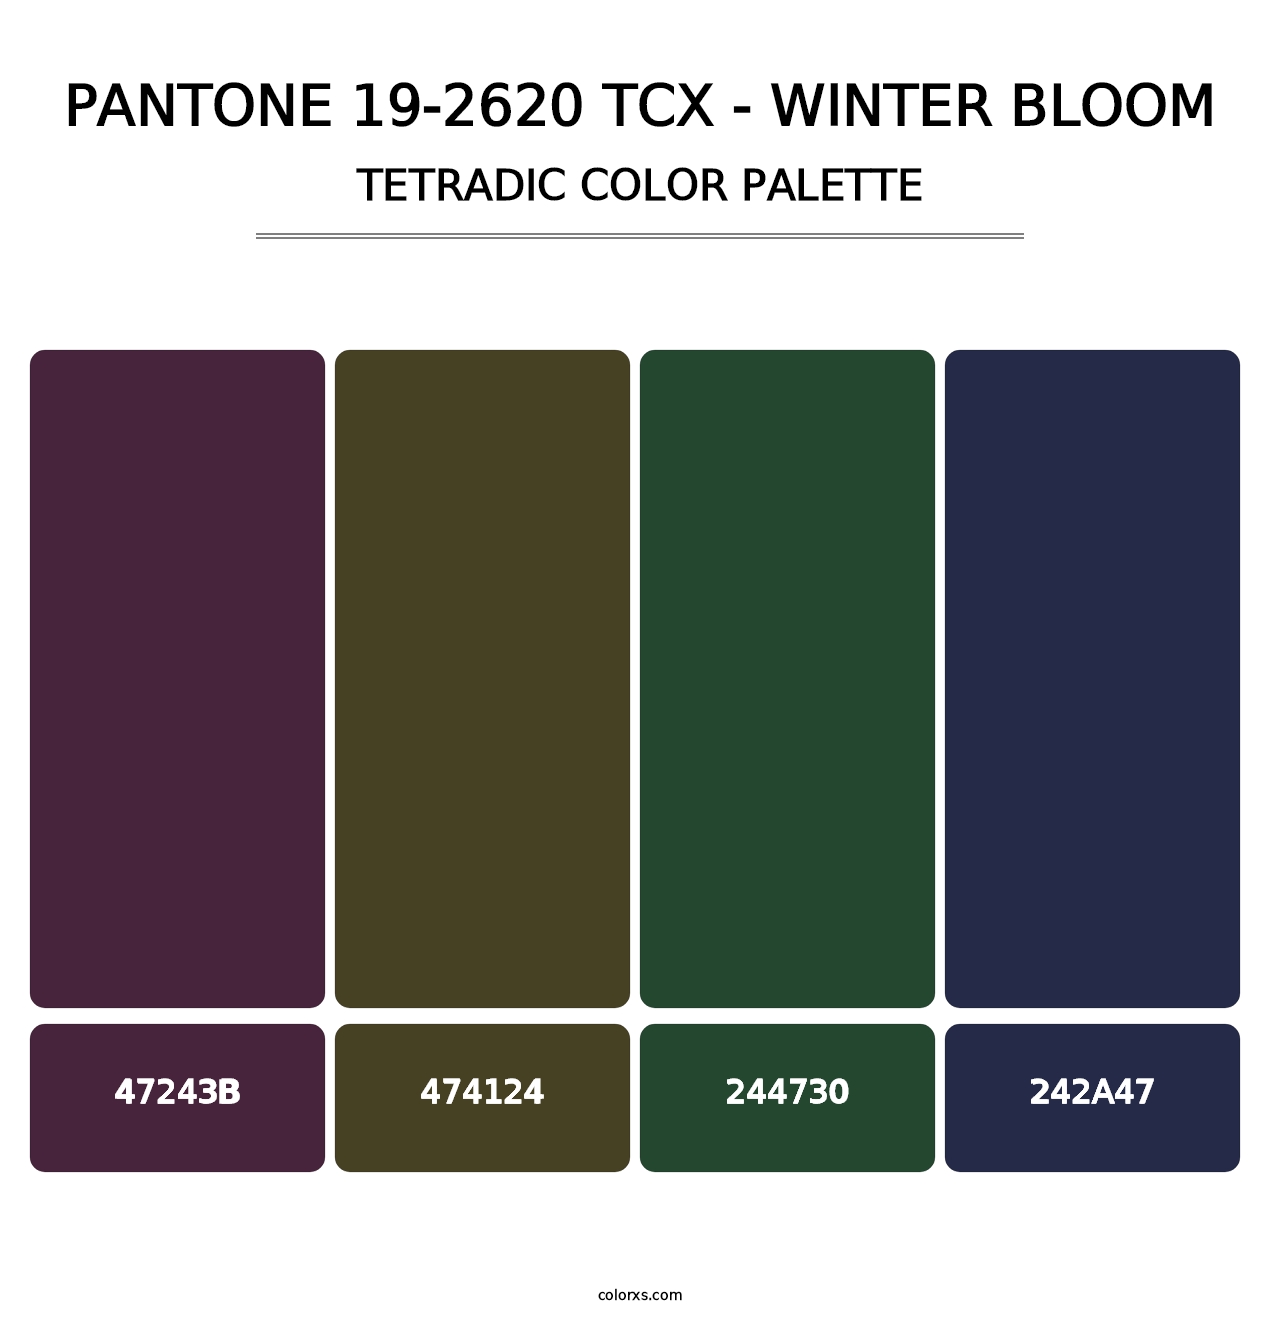 PANTONE 19-2620 TCX - Winter Bloom - Tetradic Color Palette